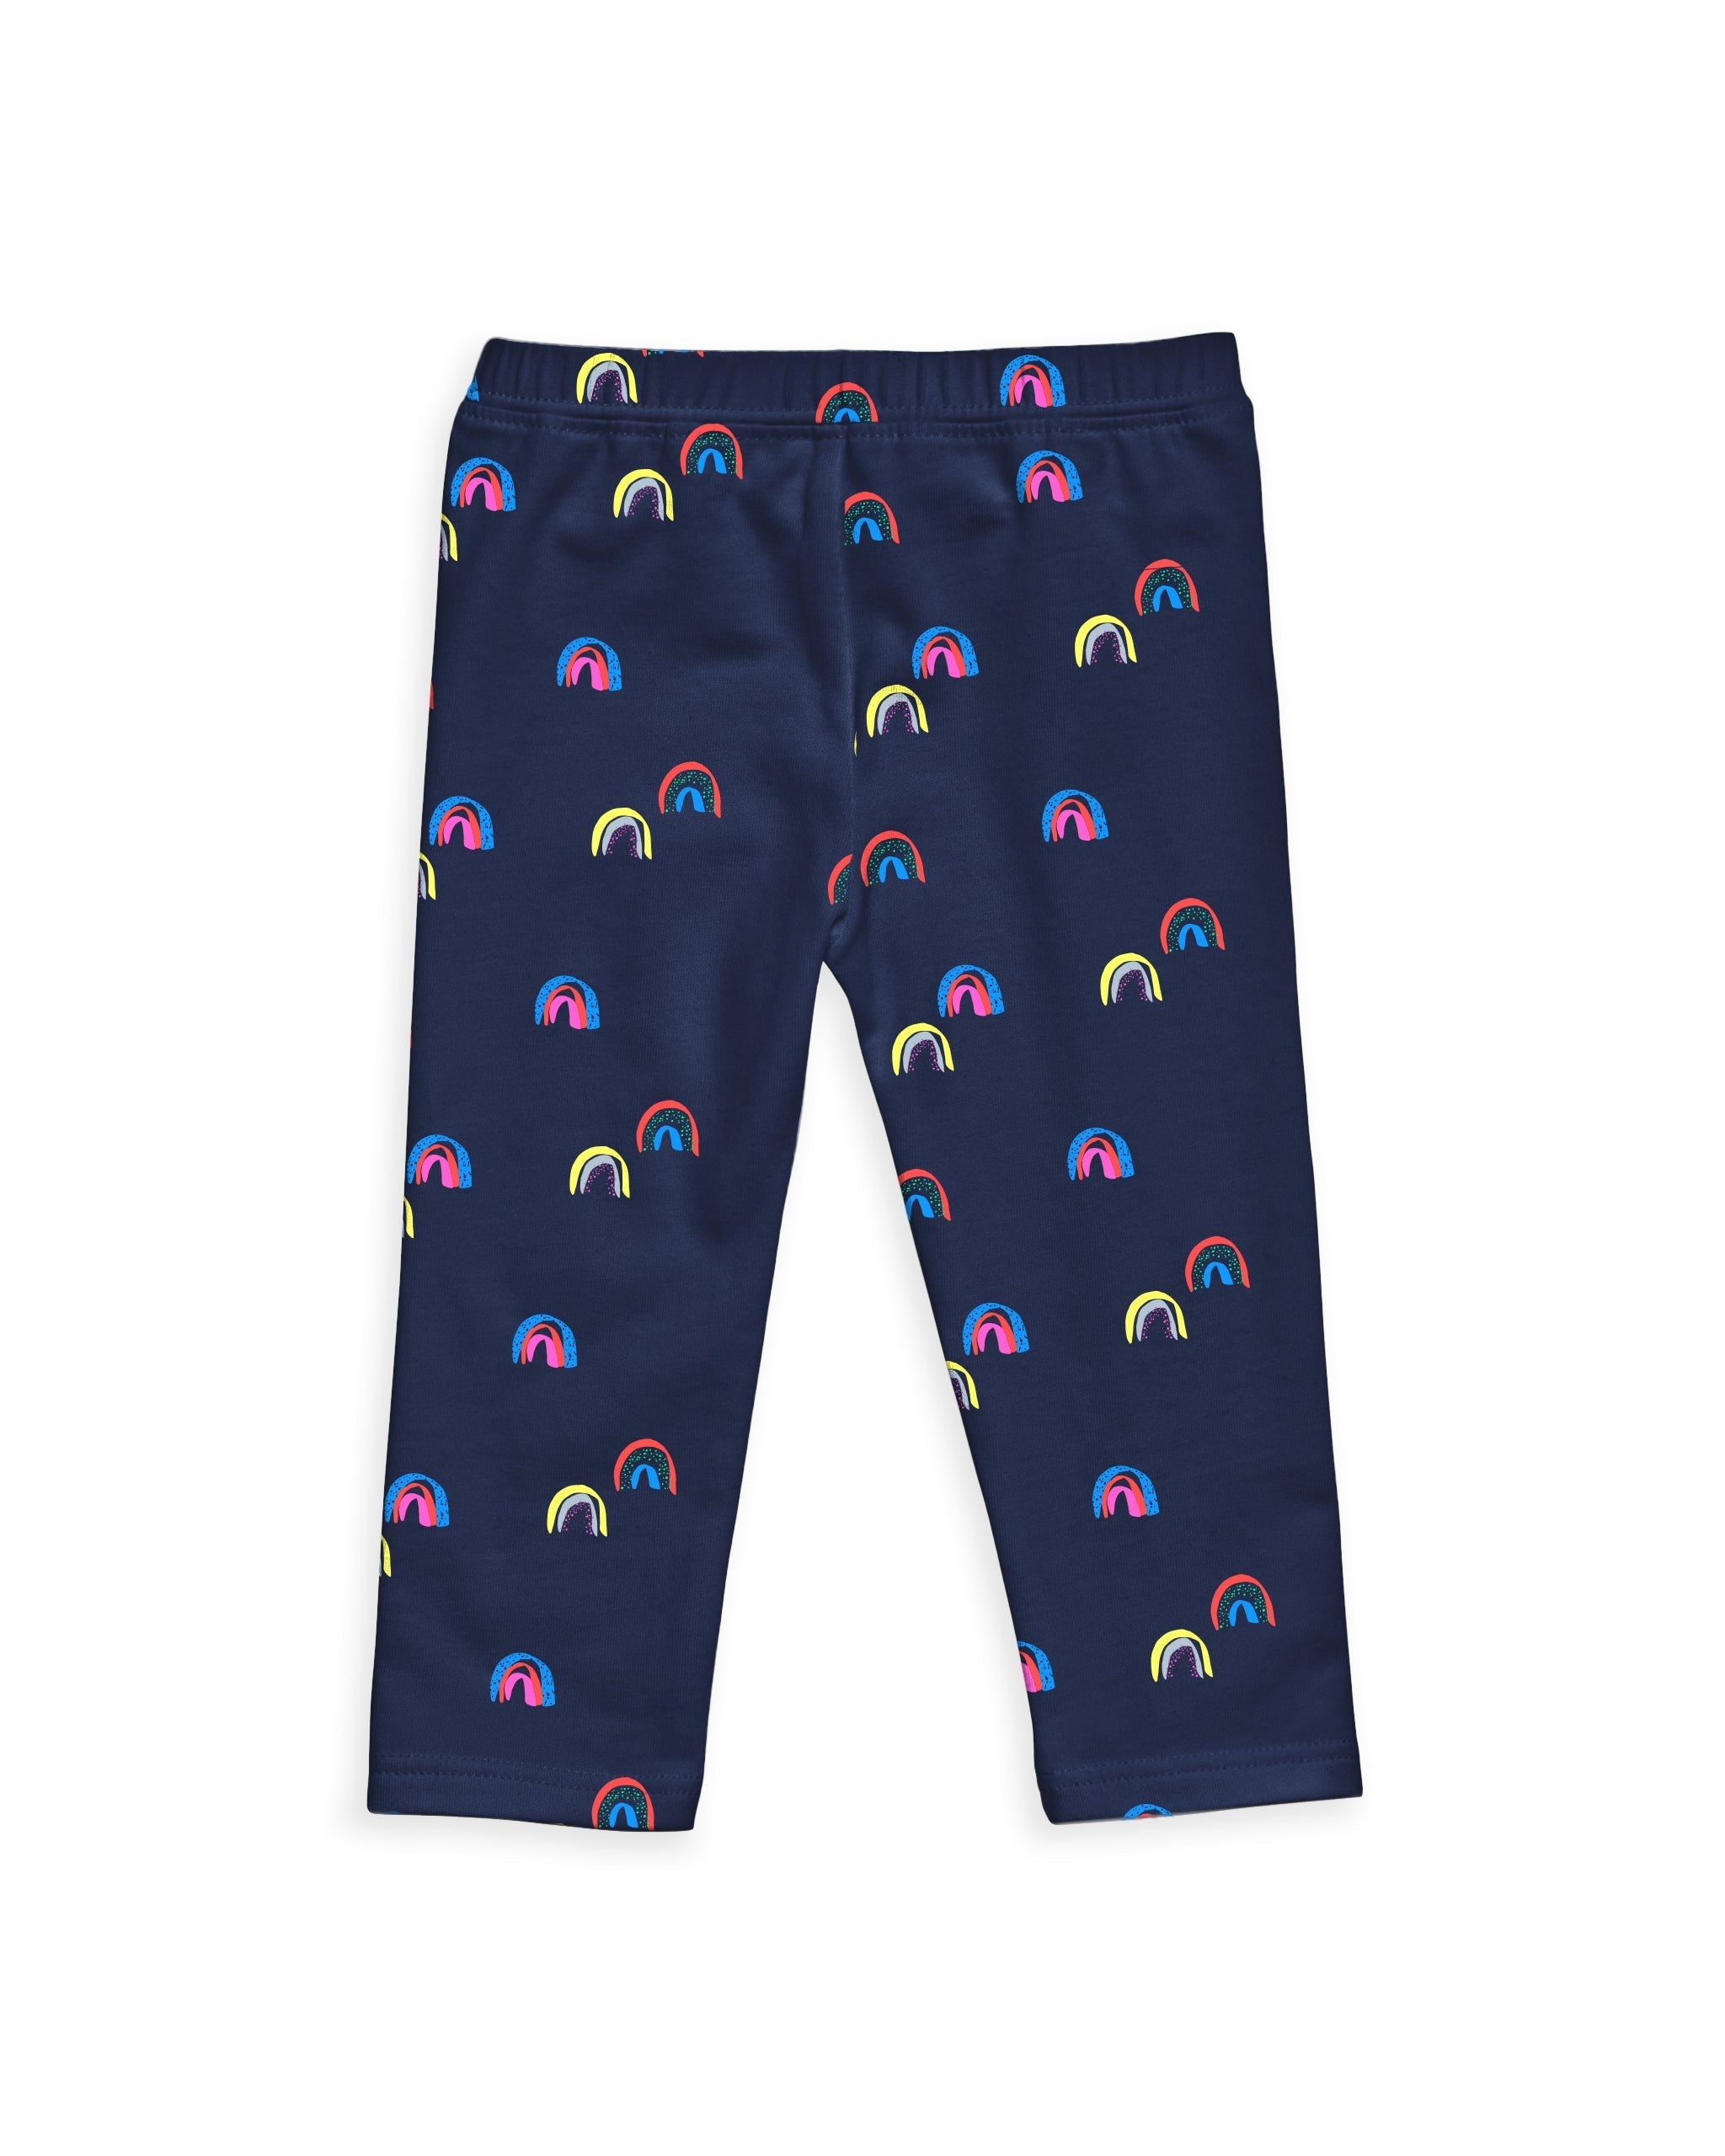 Children's Comfortable Soft Full Length Leggings Fun Neon Colors Pants  FS81613